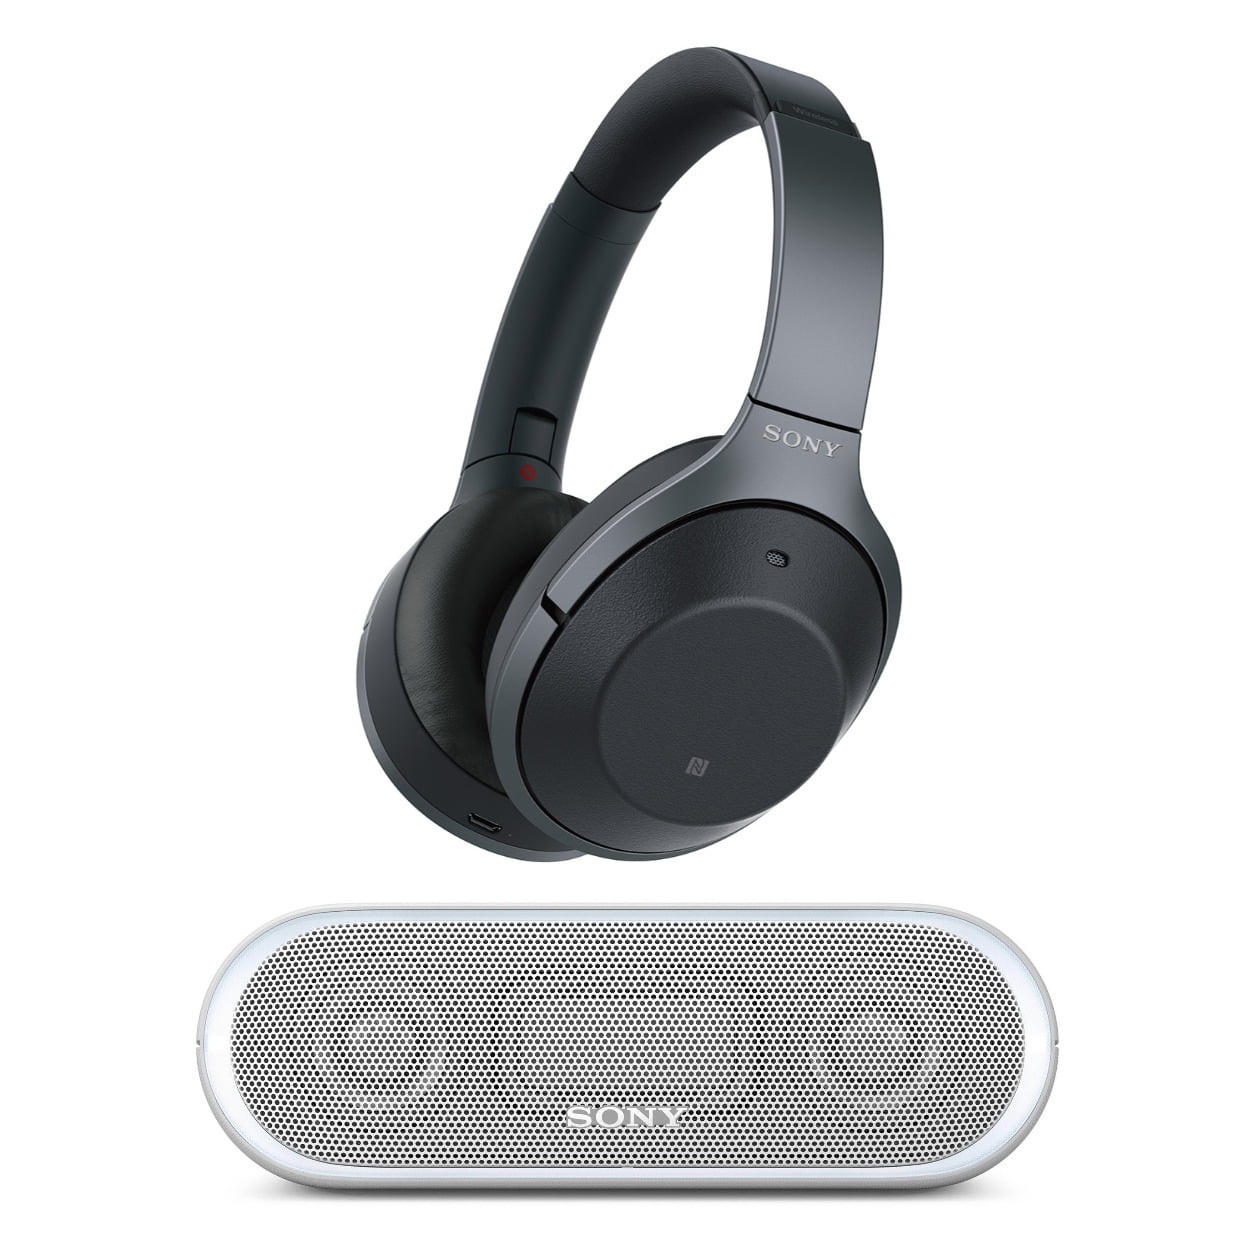 Sony Wireless Noise Cancelling Headphones (Black) with Portable Wireless Speaker